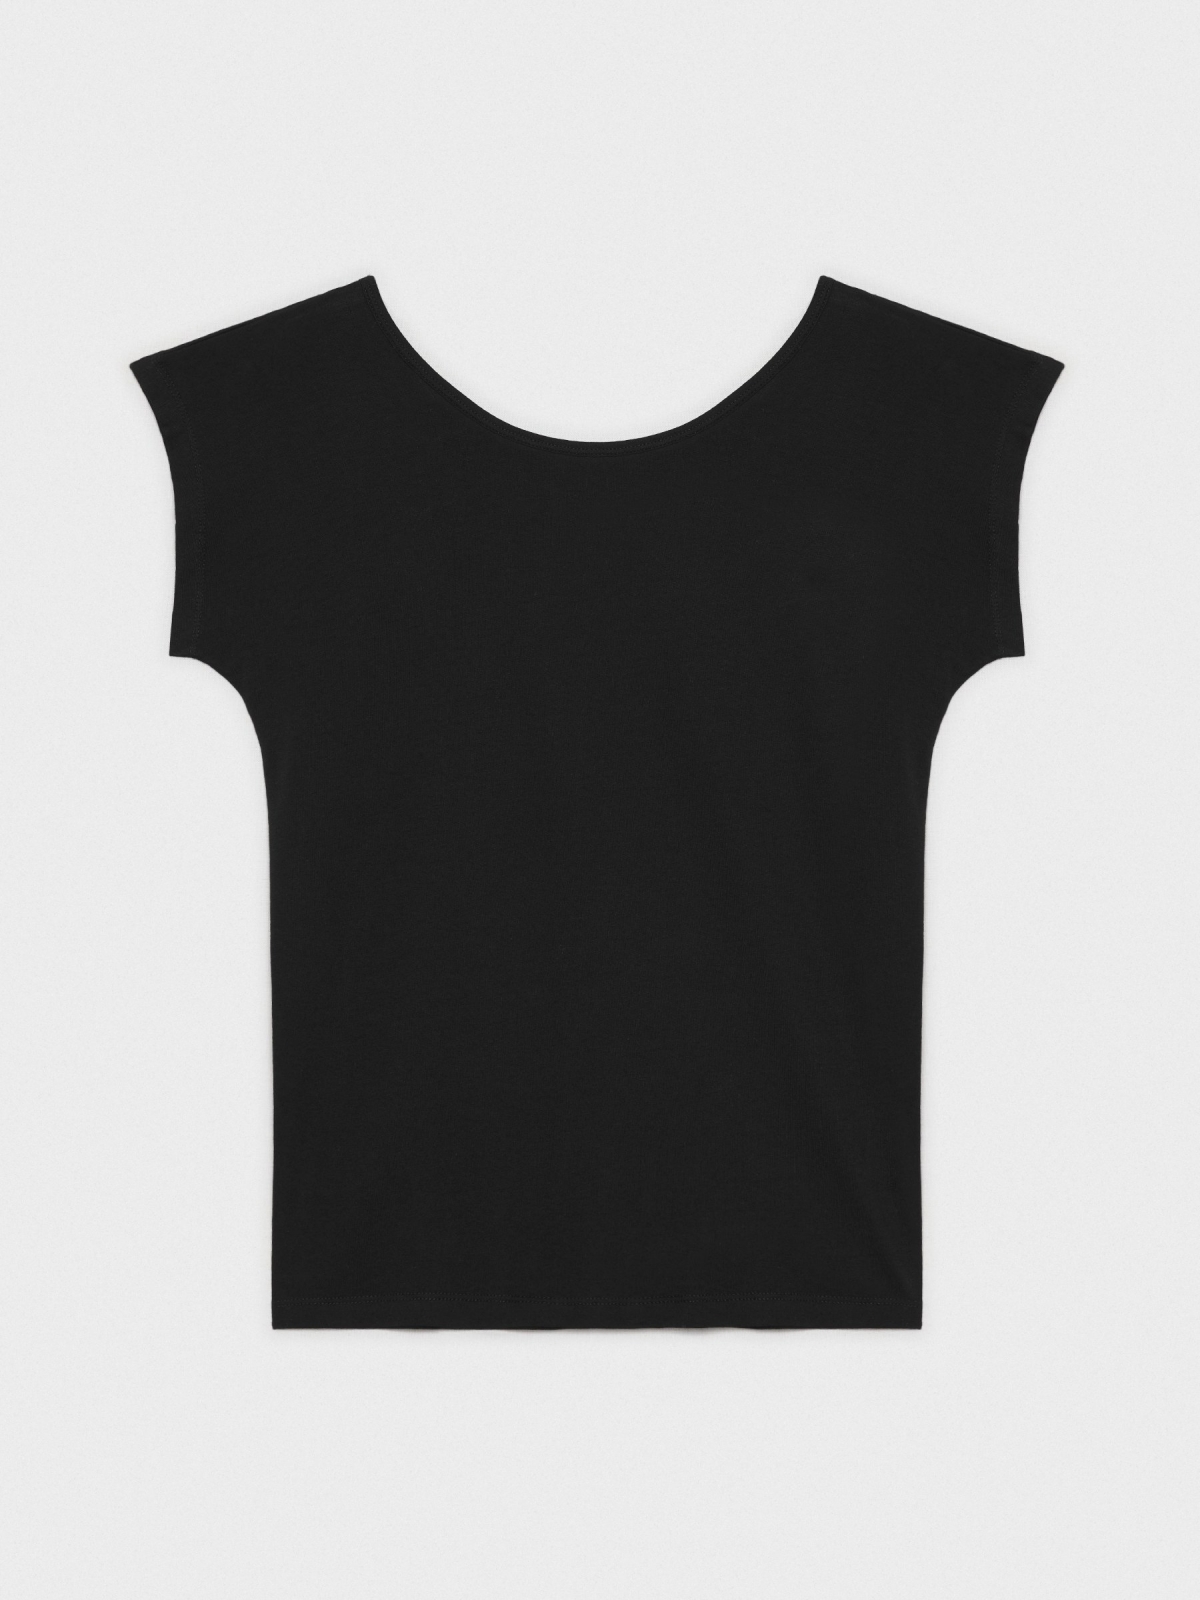  T-shirt with back neckline black